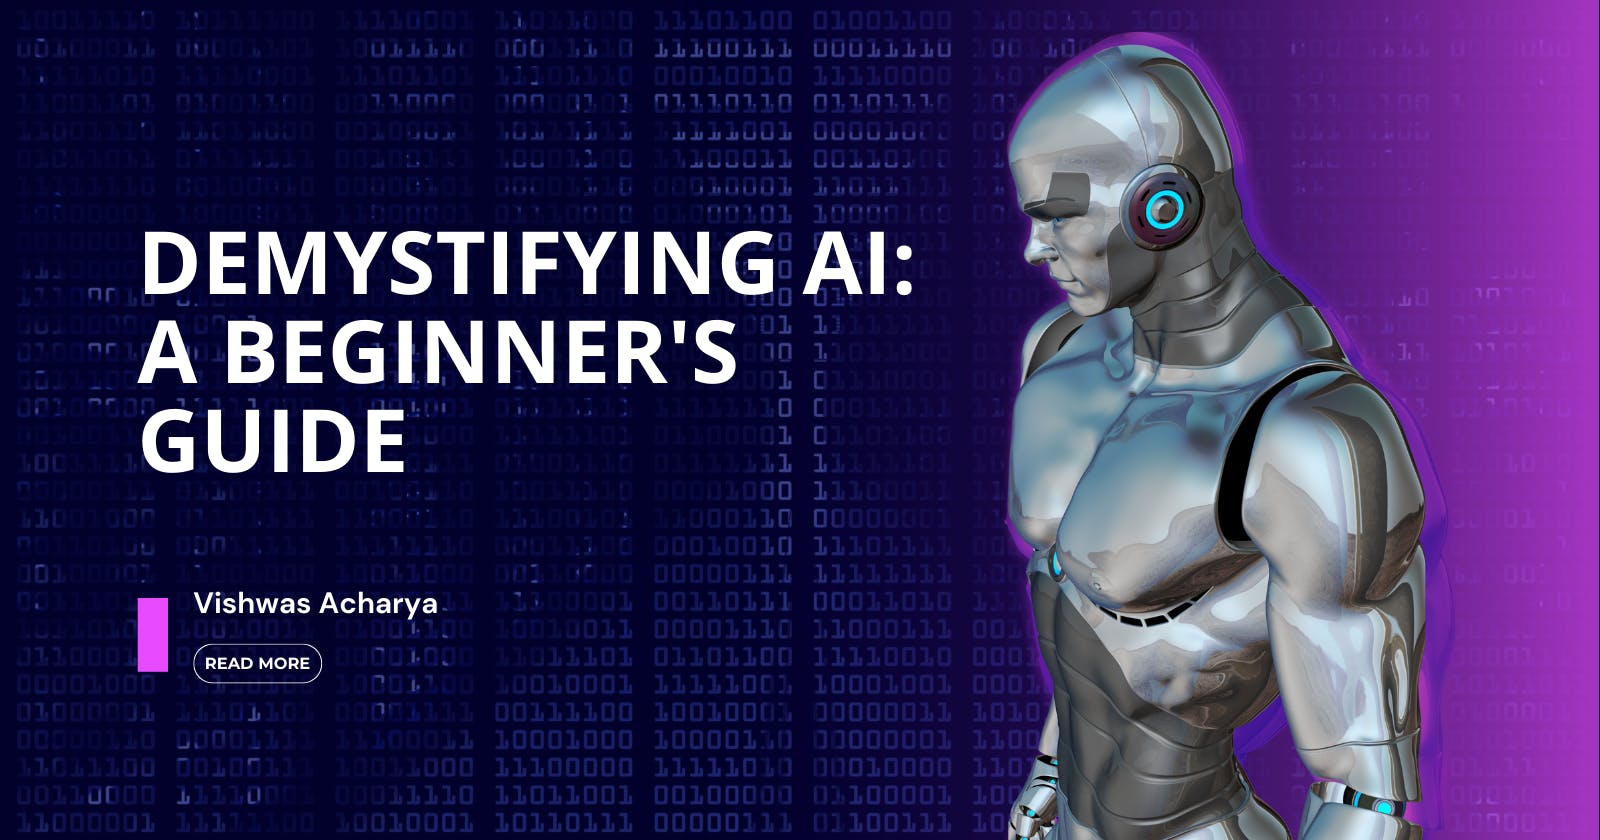 Demystifying AI: A Beginner's Guide